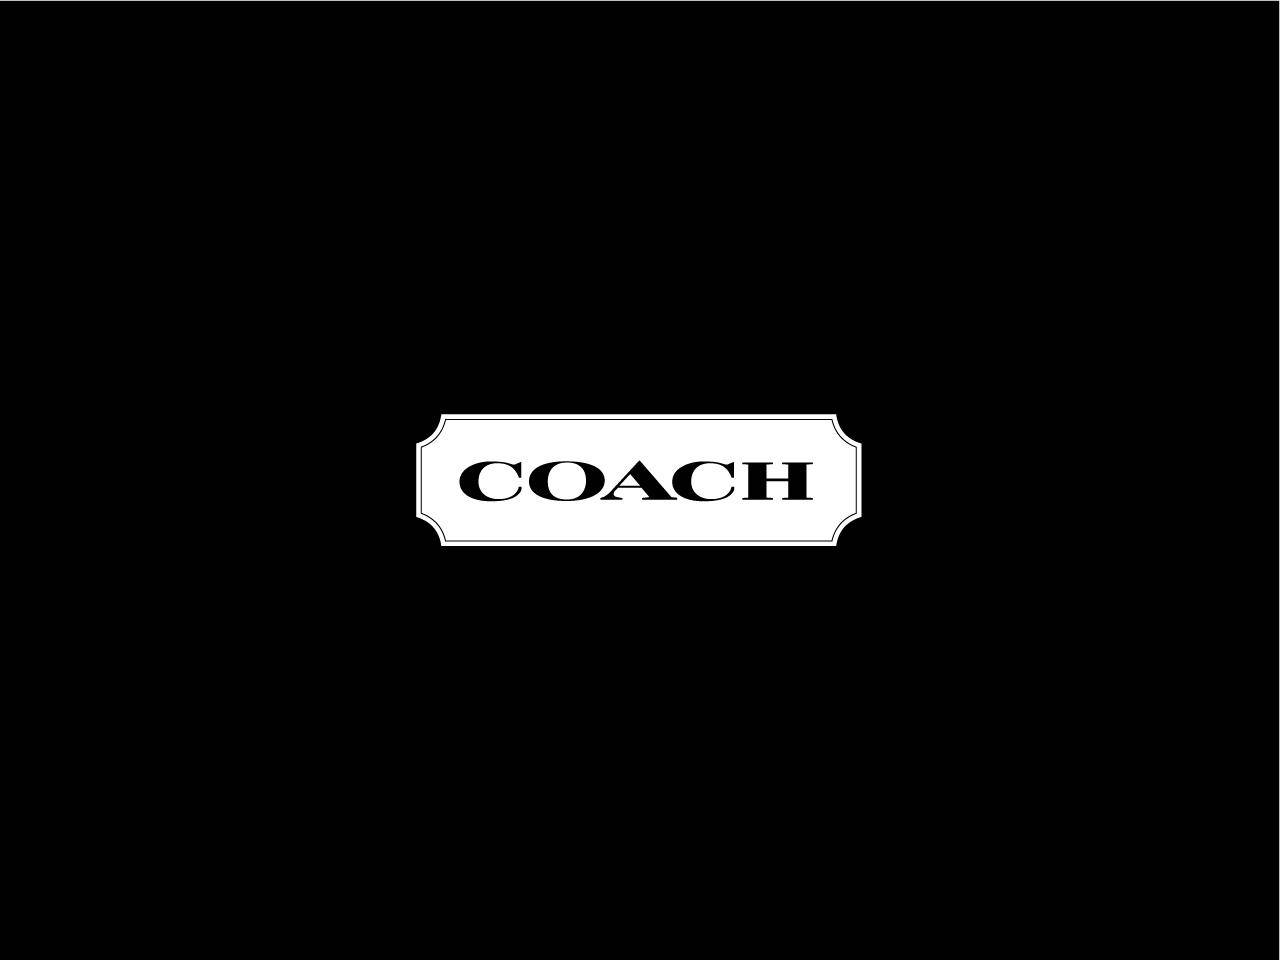 Black And White Coach Logo Wallpaper